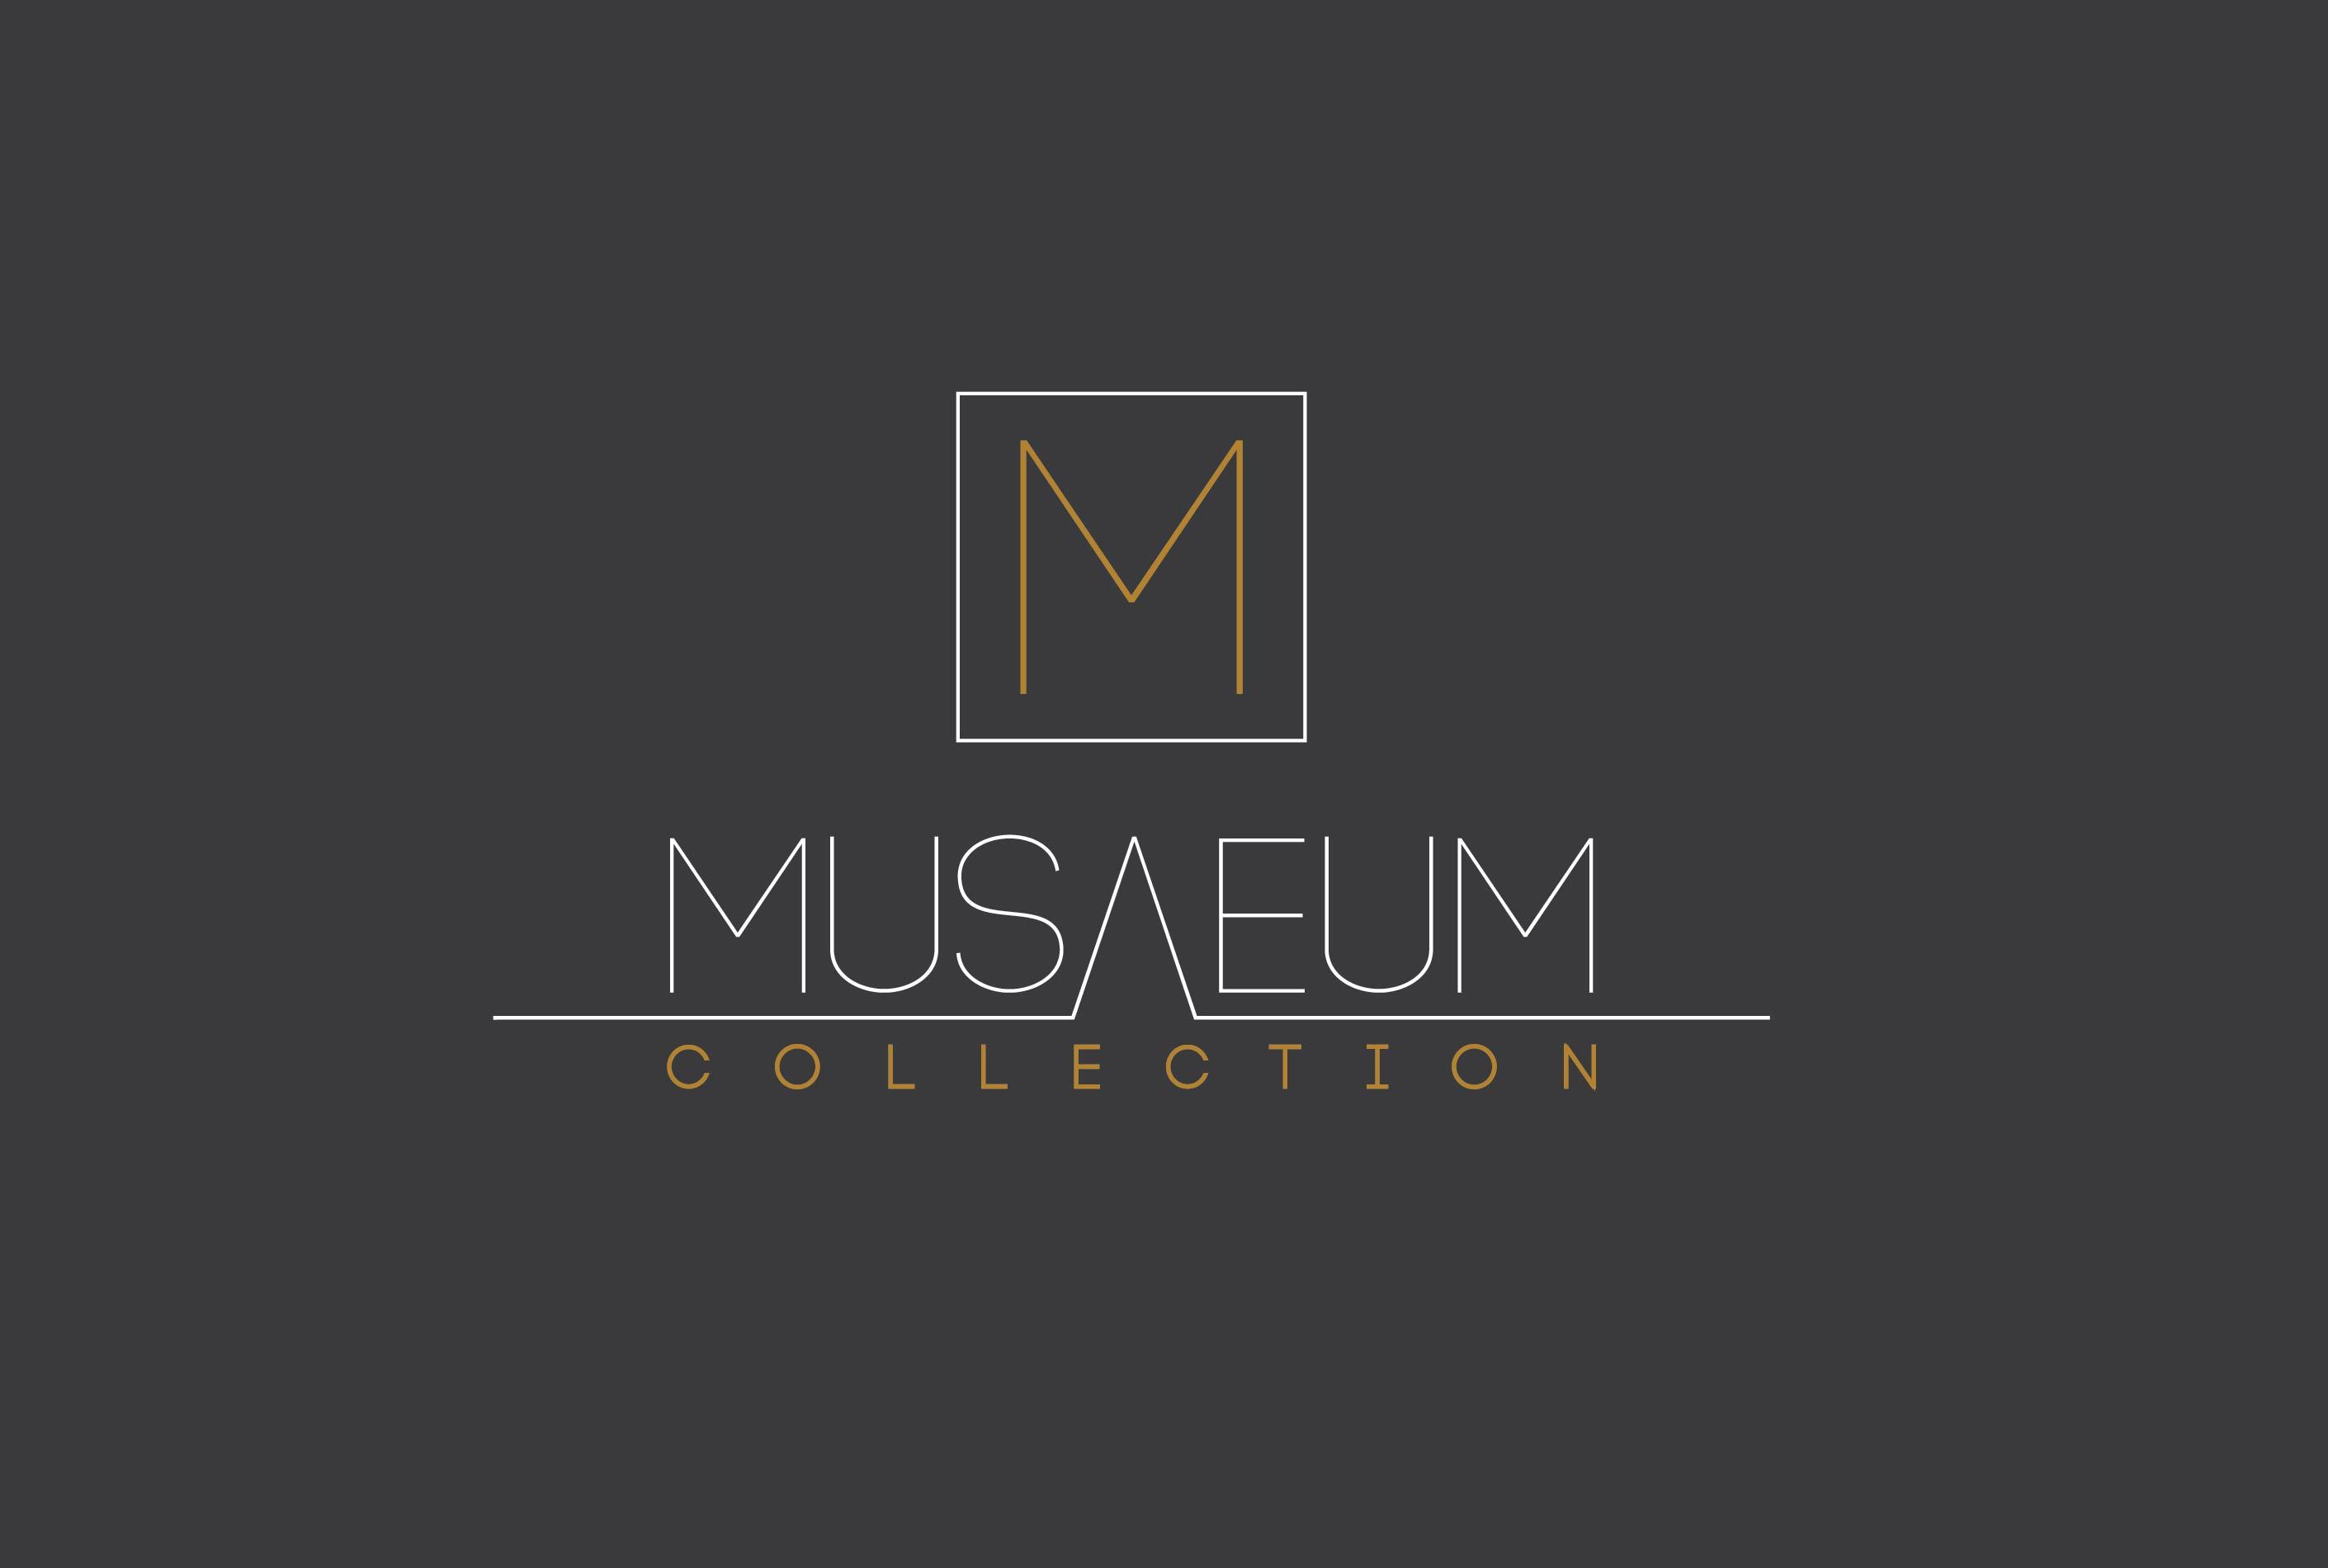 Upscale Logo - logo for “Musaeum Collection”